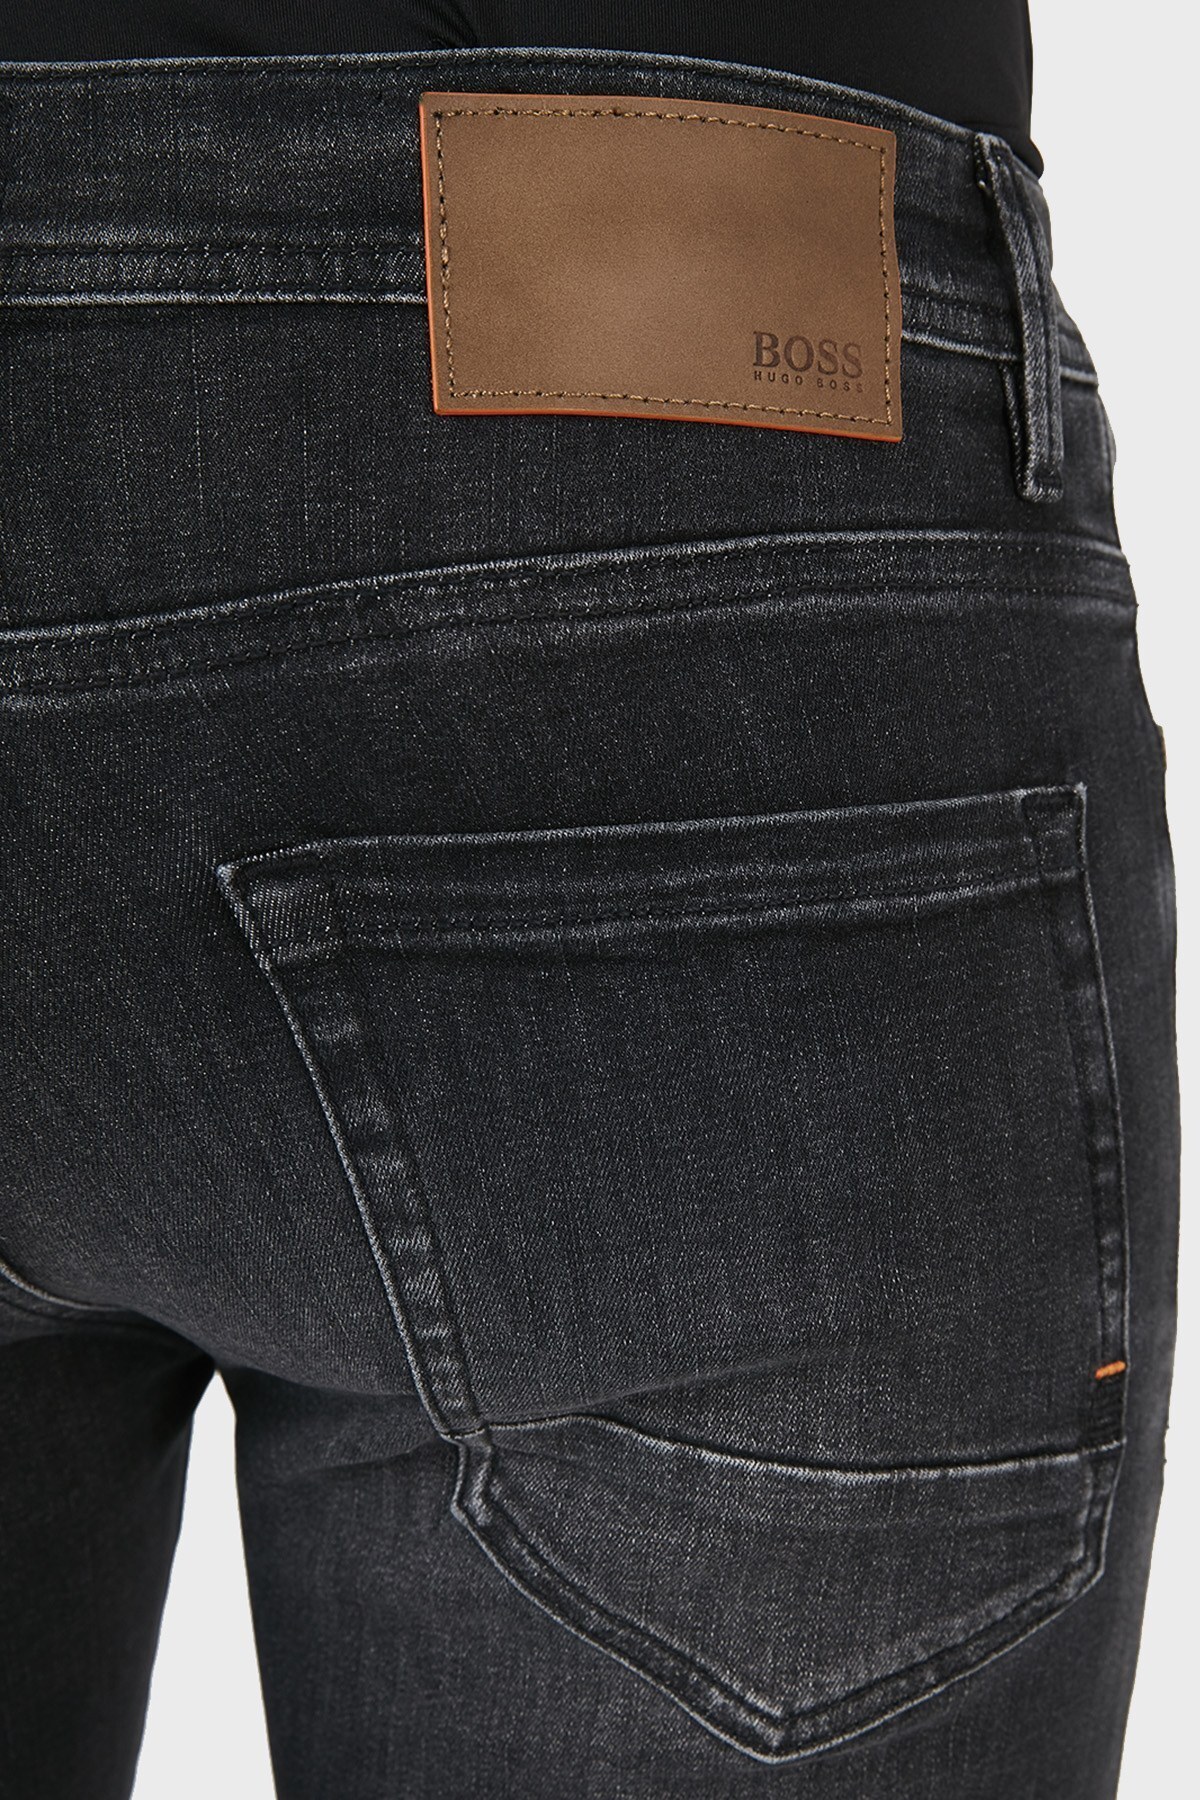 Hugo Boss Extra Slim Fit Cepli Pamuk Jeans Erkek Kot Pantolon 50453287 005 SİYAH